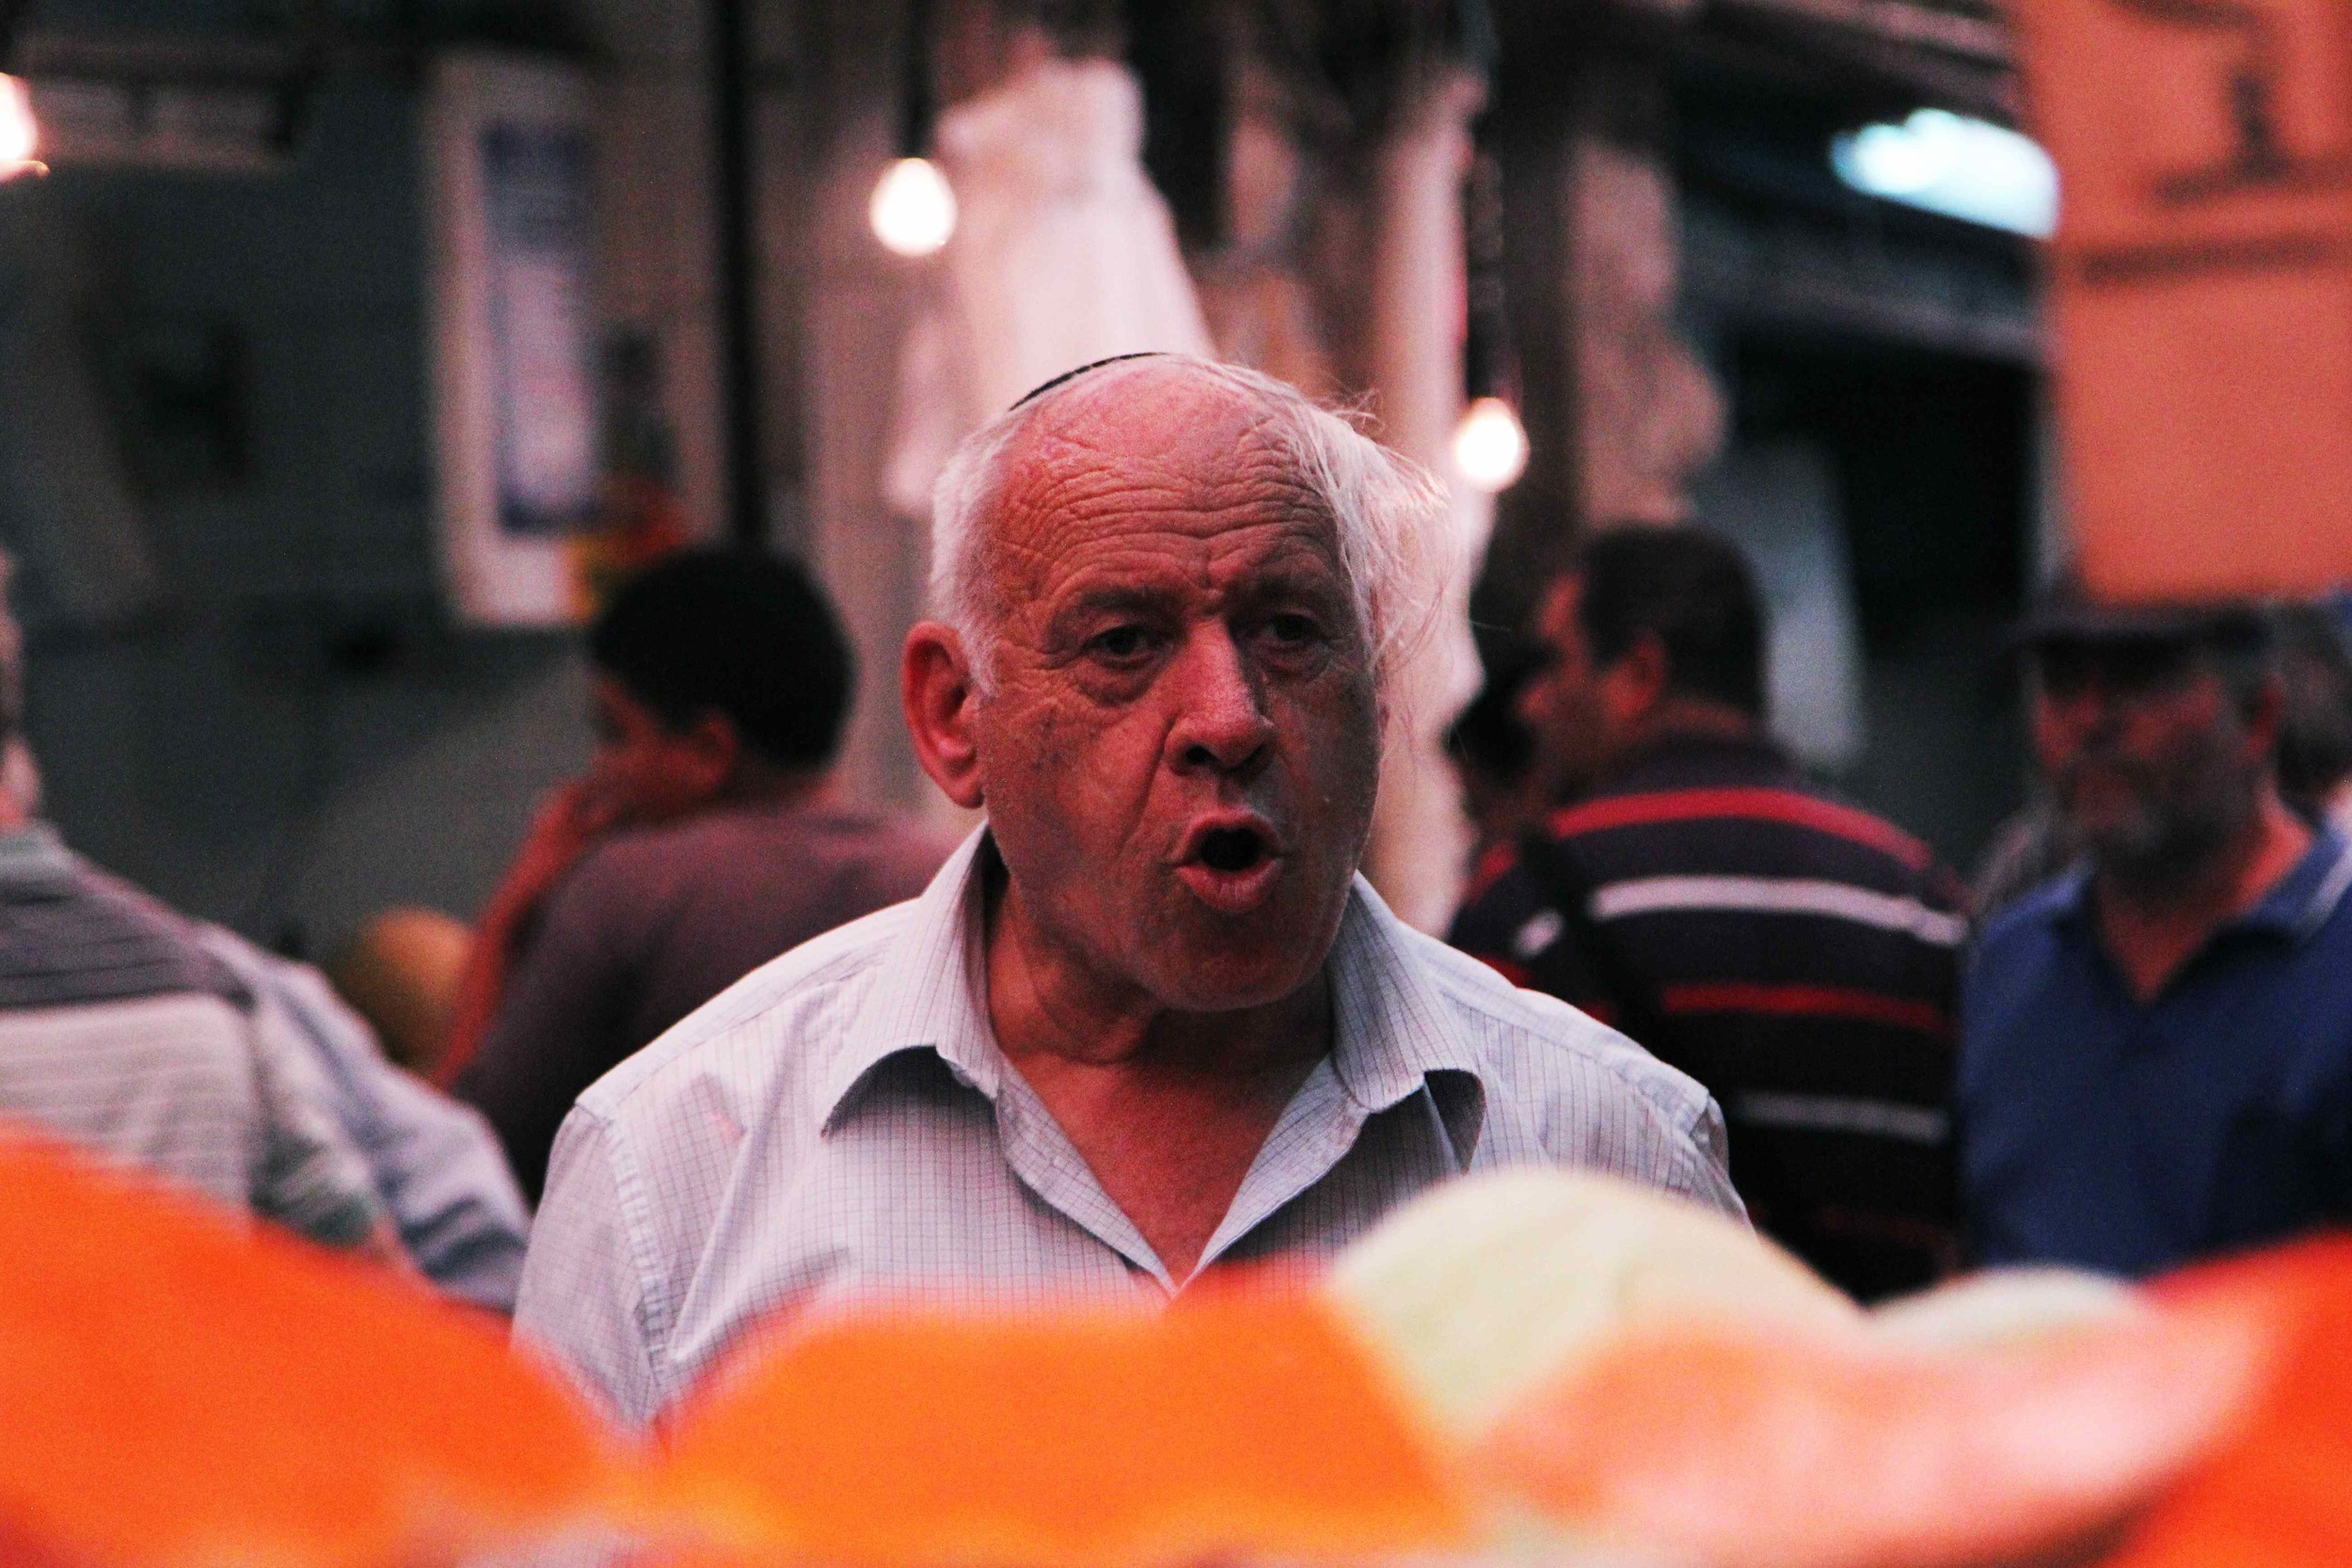 Man shouting in market.jpg